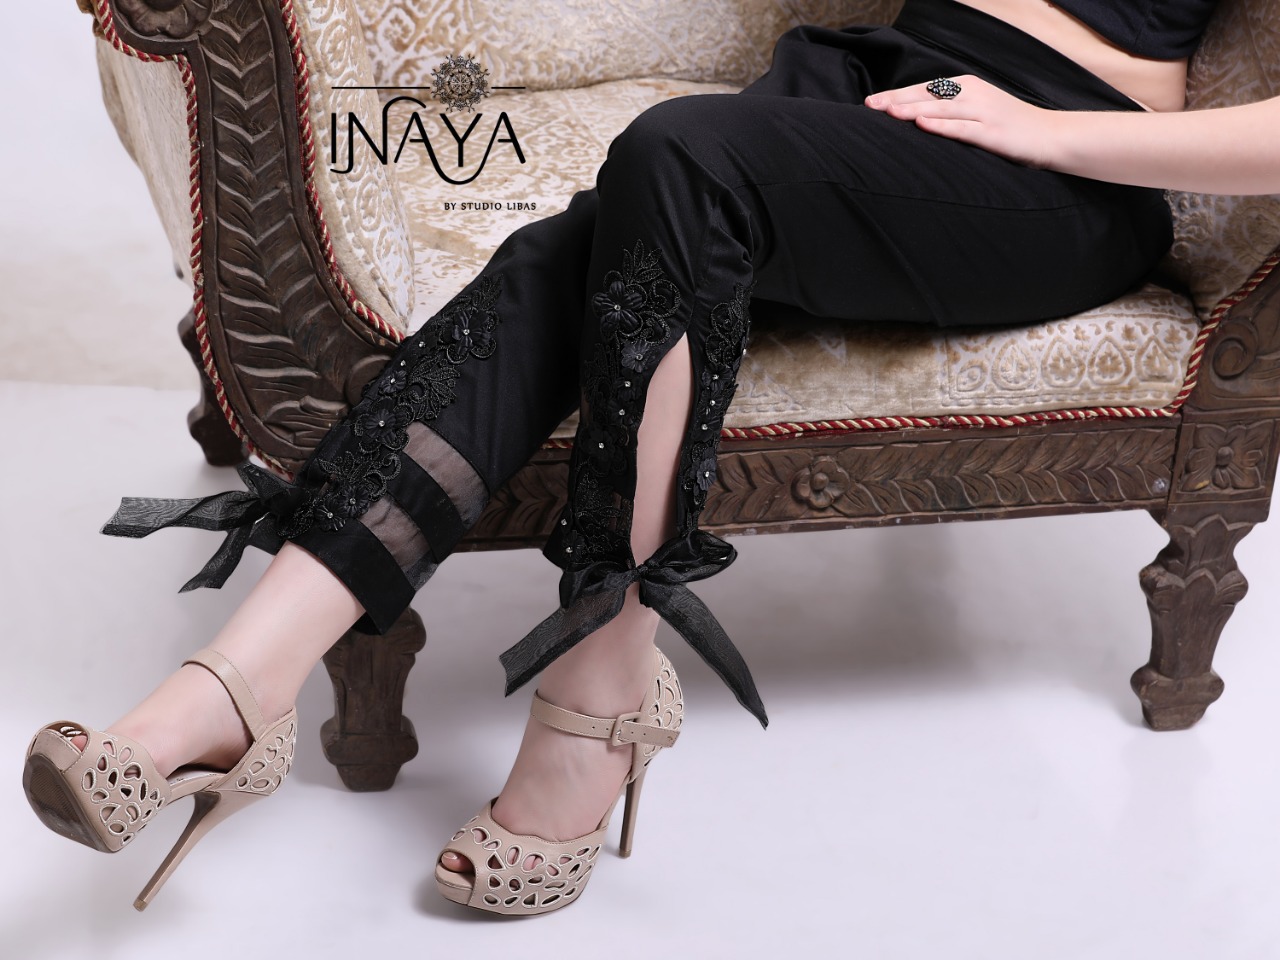 Inaya by studio libas presenting stylish cigarette pants concept